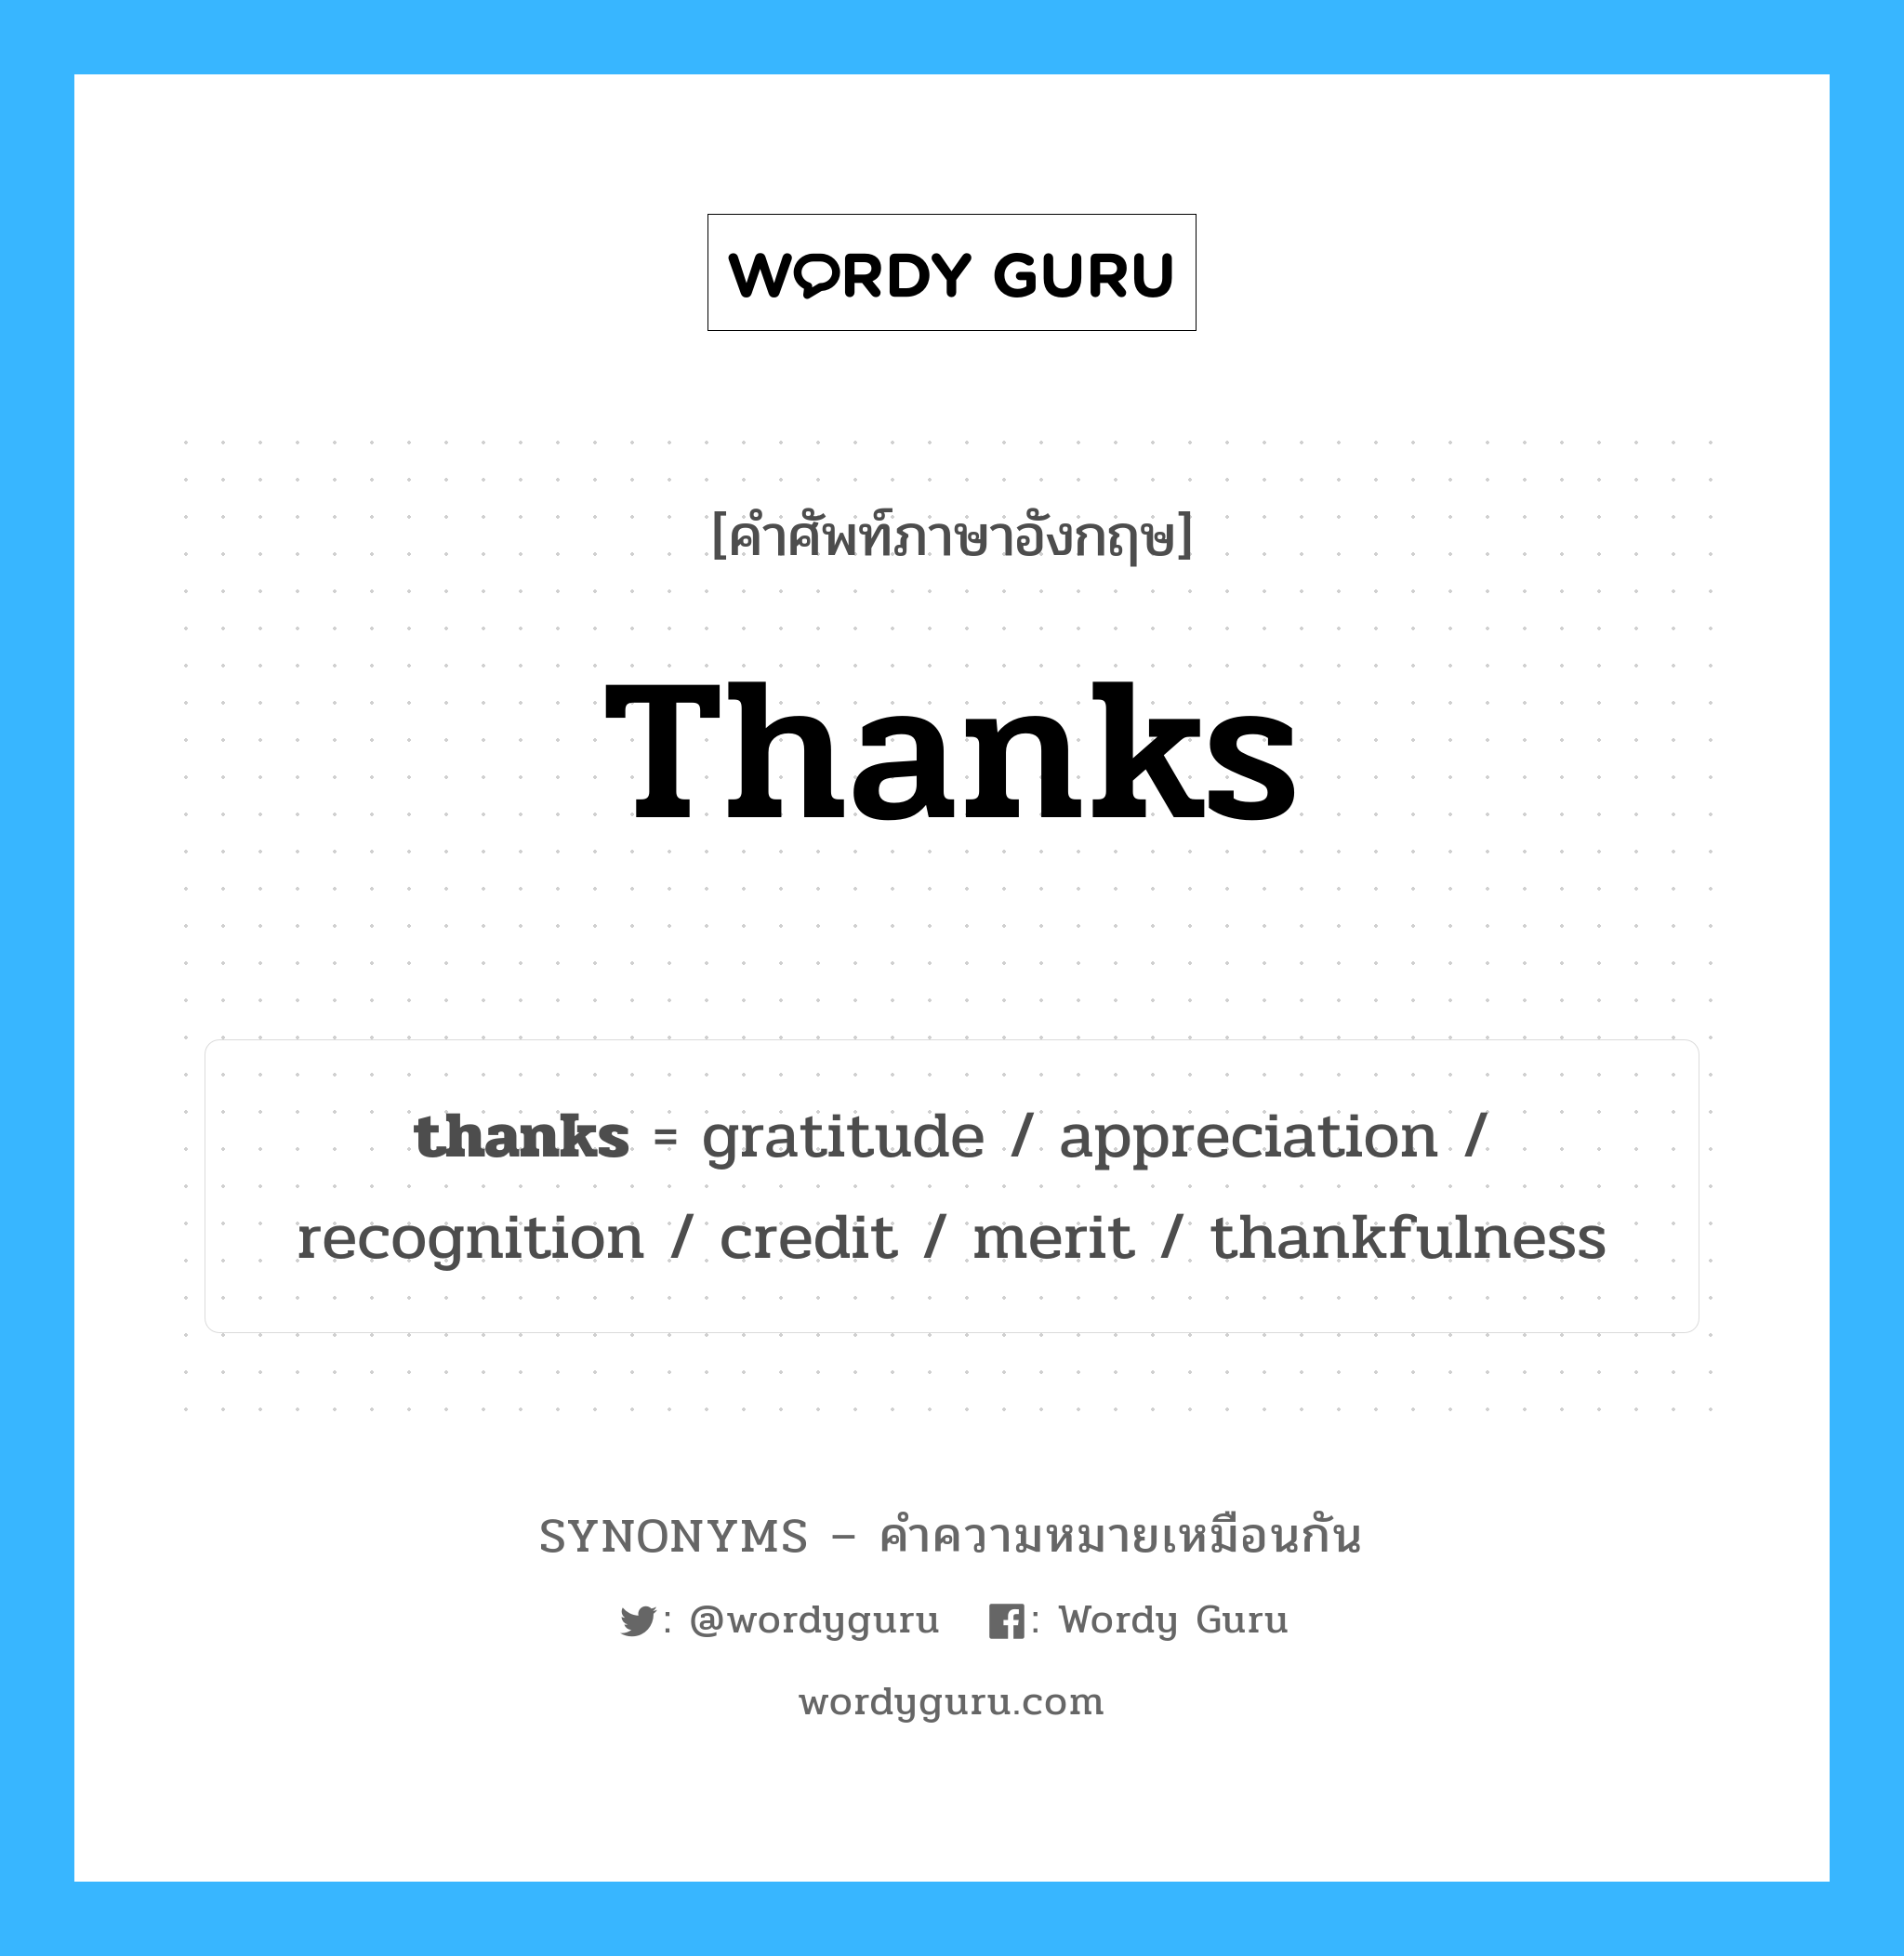 appreciation เป็นหนึ่งใน thanks และมีคำอื่น ๆ อีกดังนี้, คำศัพท์ภาษาอังกฤษ appreciation ความหมายคล้ายกันกับ thanks แปลว่า ความชื่นชม หมวด thanks